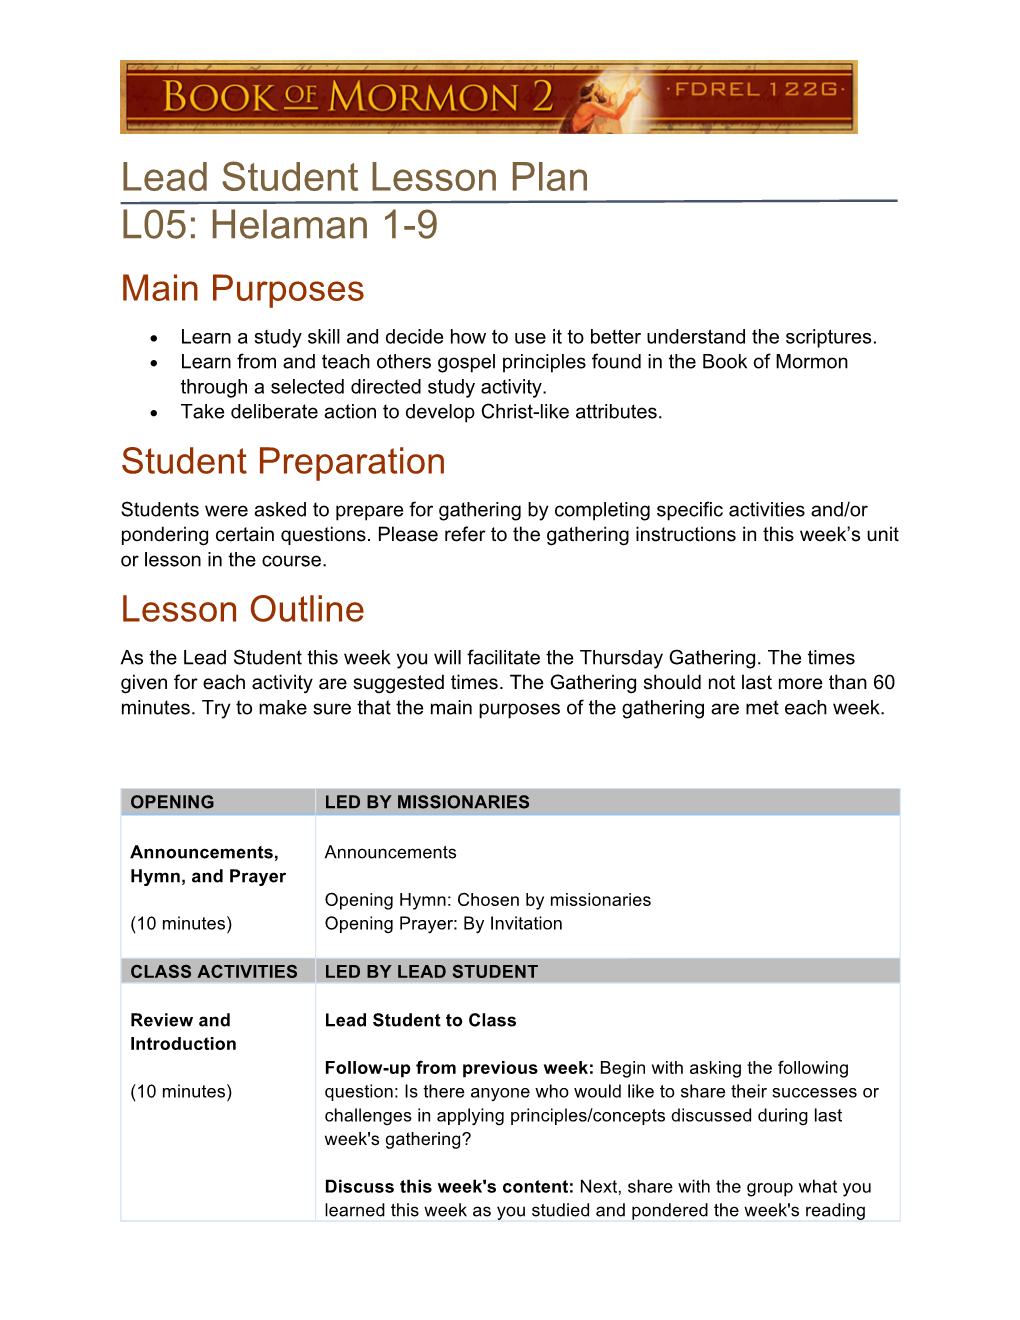 Lead Student Lesson Plan L05: Helaman 1-9 Main Purposes